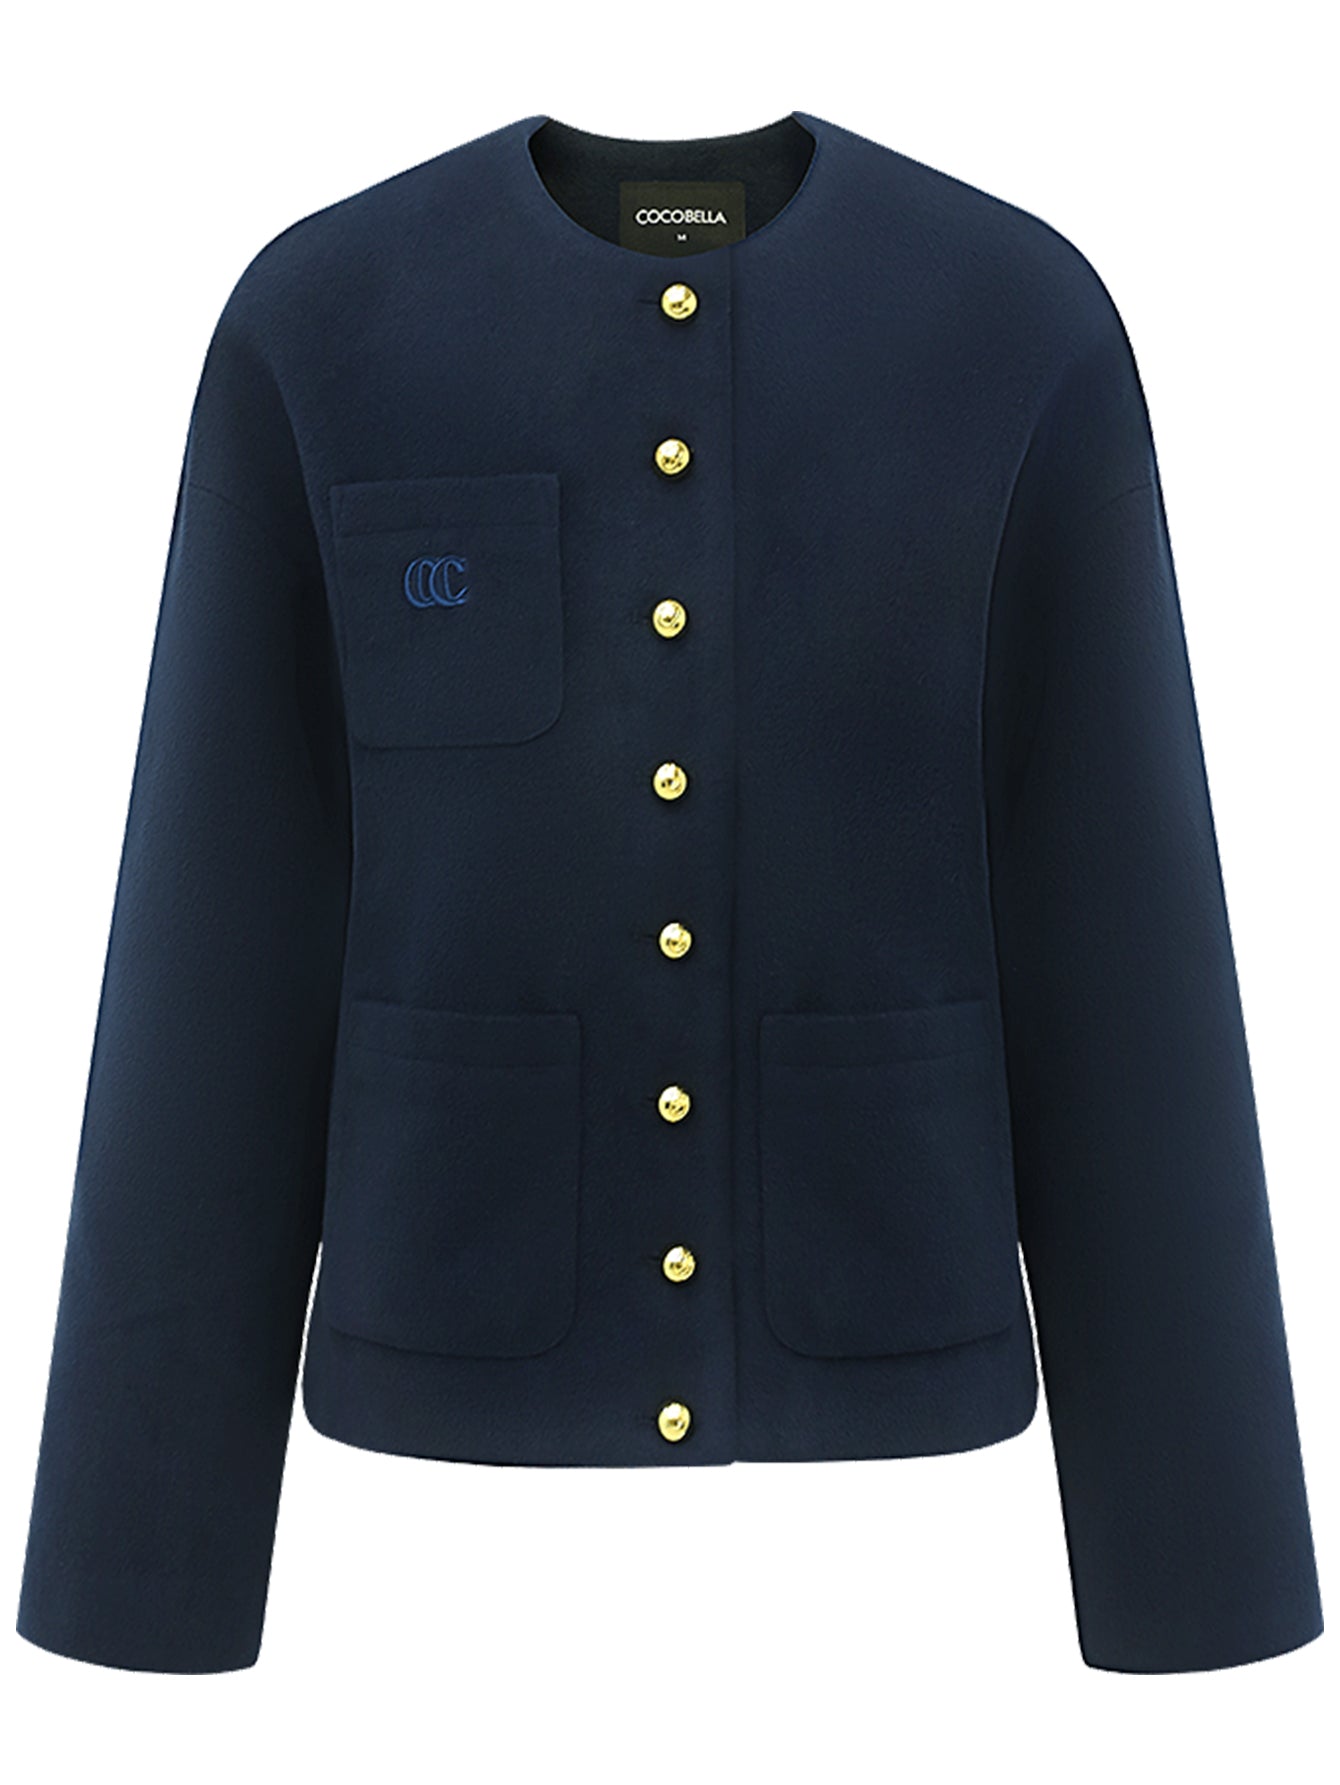 classic-collarless-navy-woolen-jacket_all_navy_4.jpg